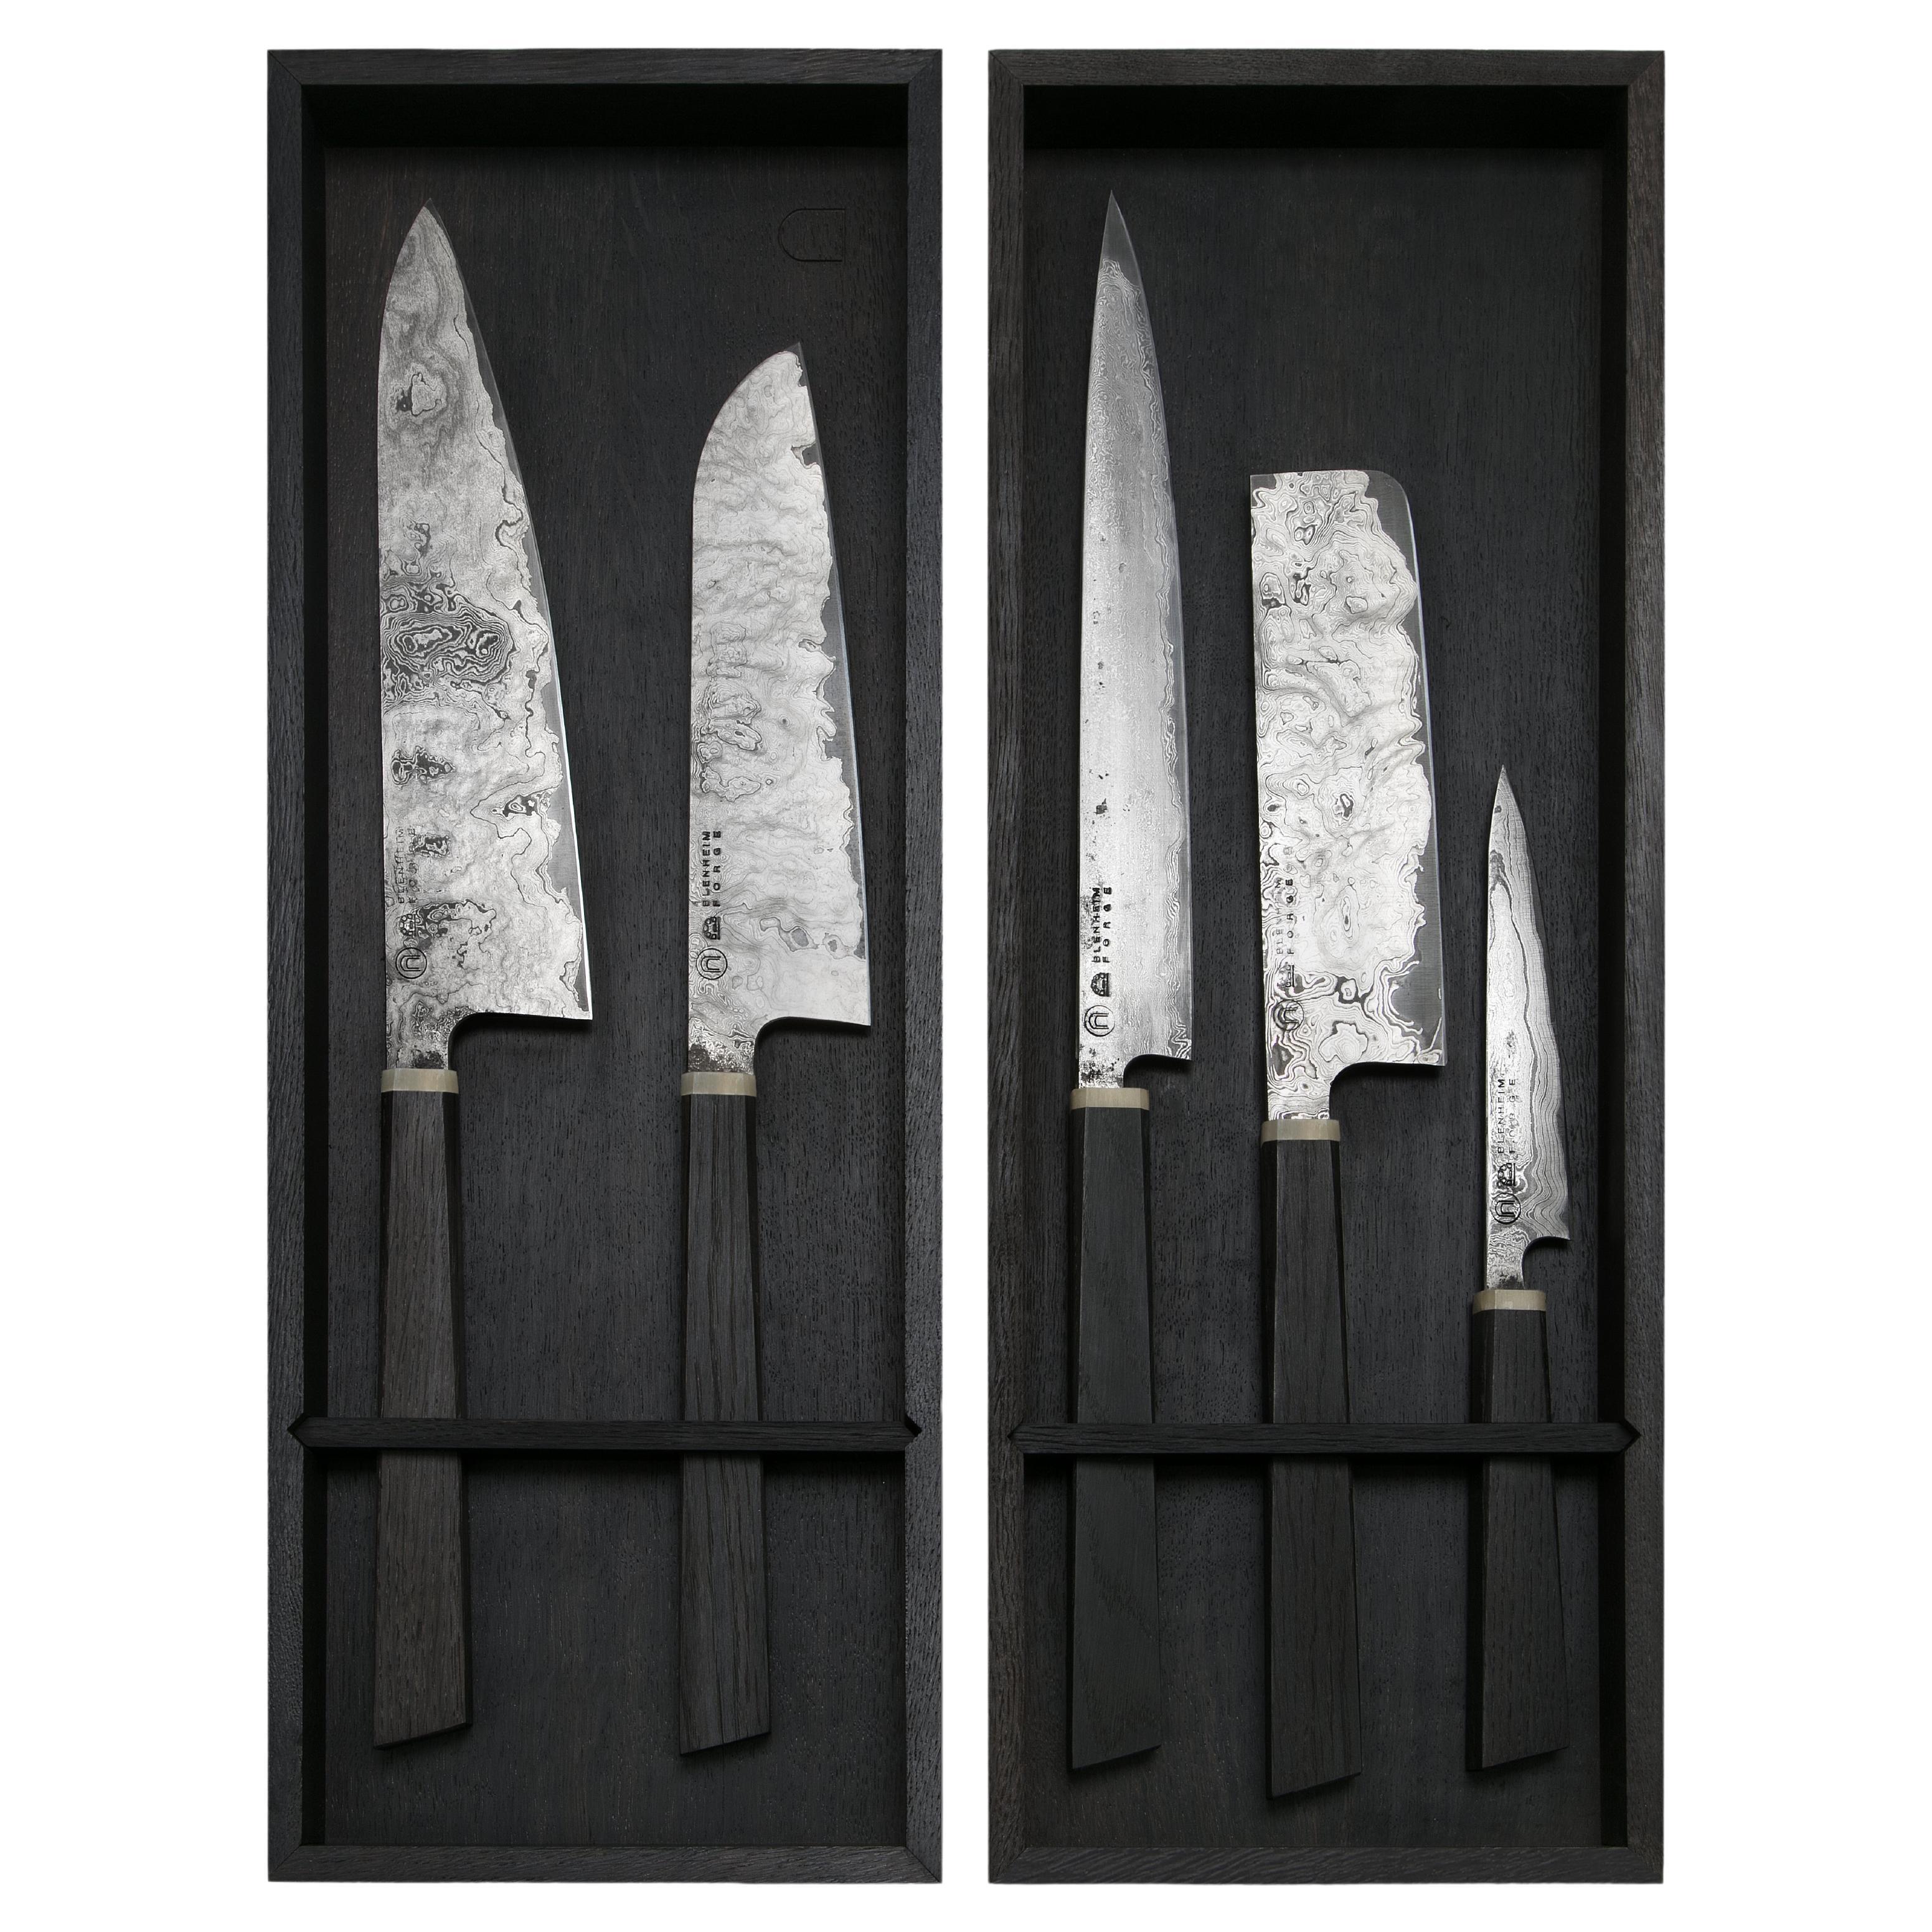 Five Damascus Steel Knife Set with 3000-5000 Year-Old Bog-Oak Display Box